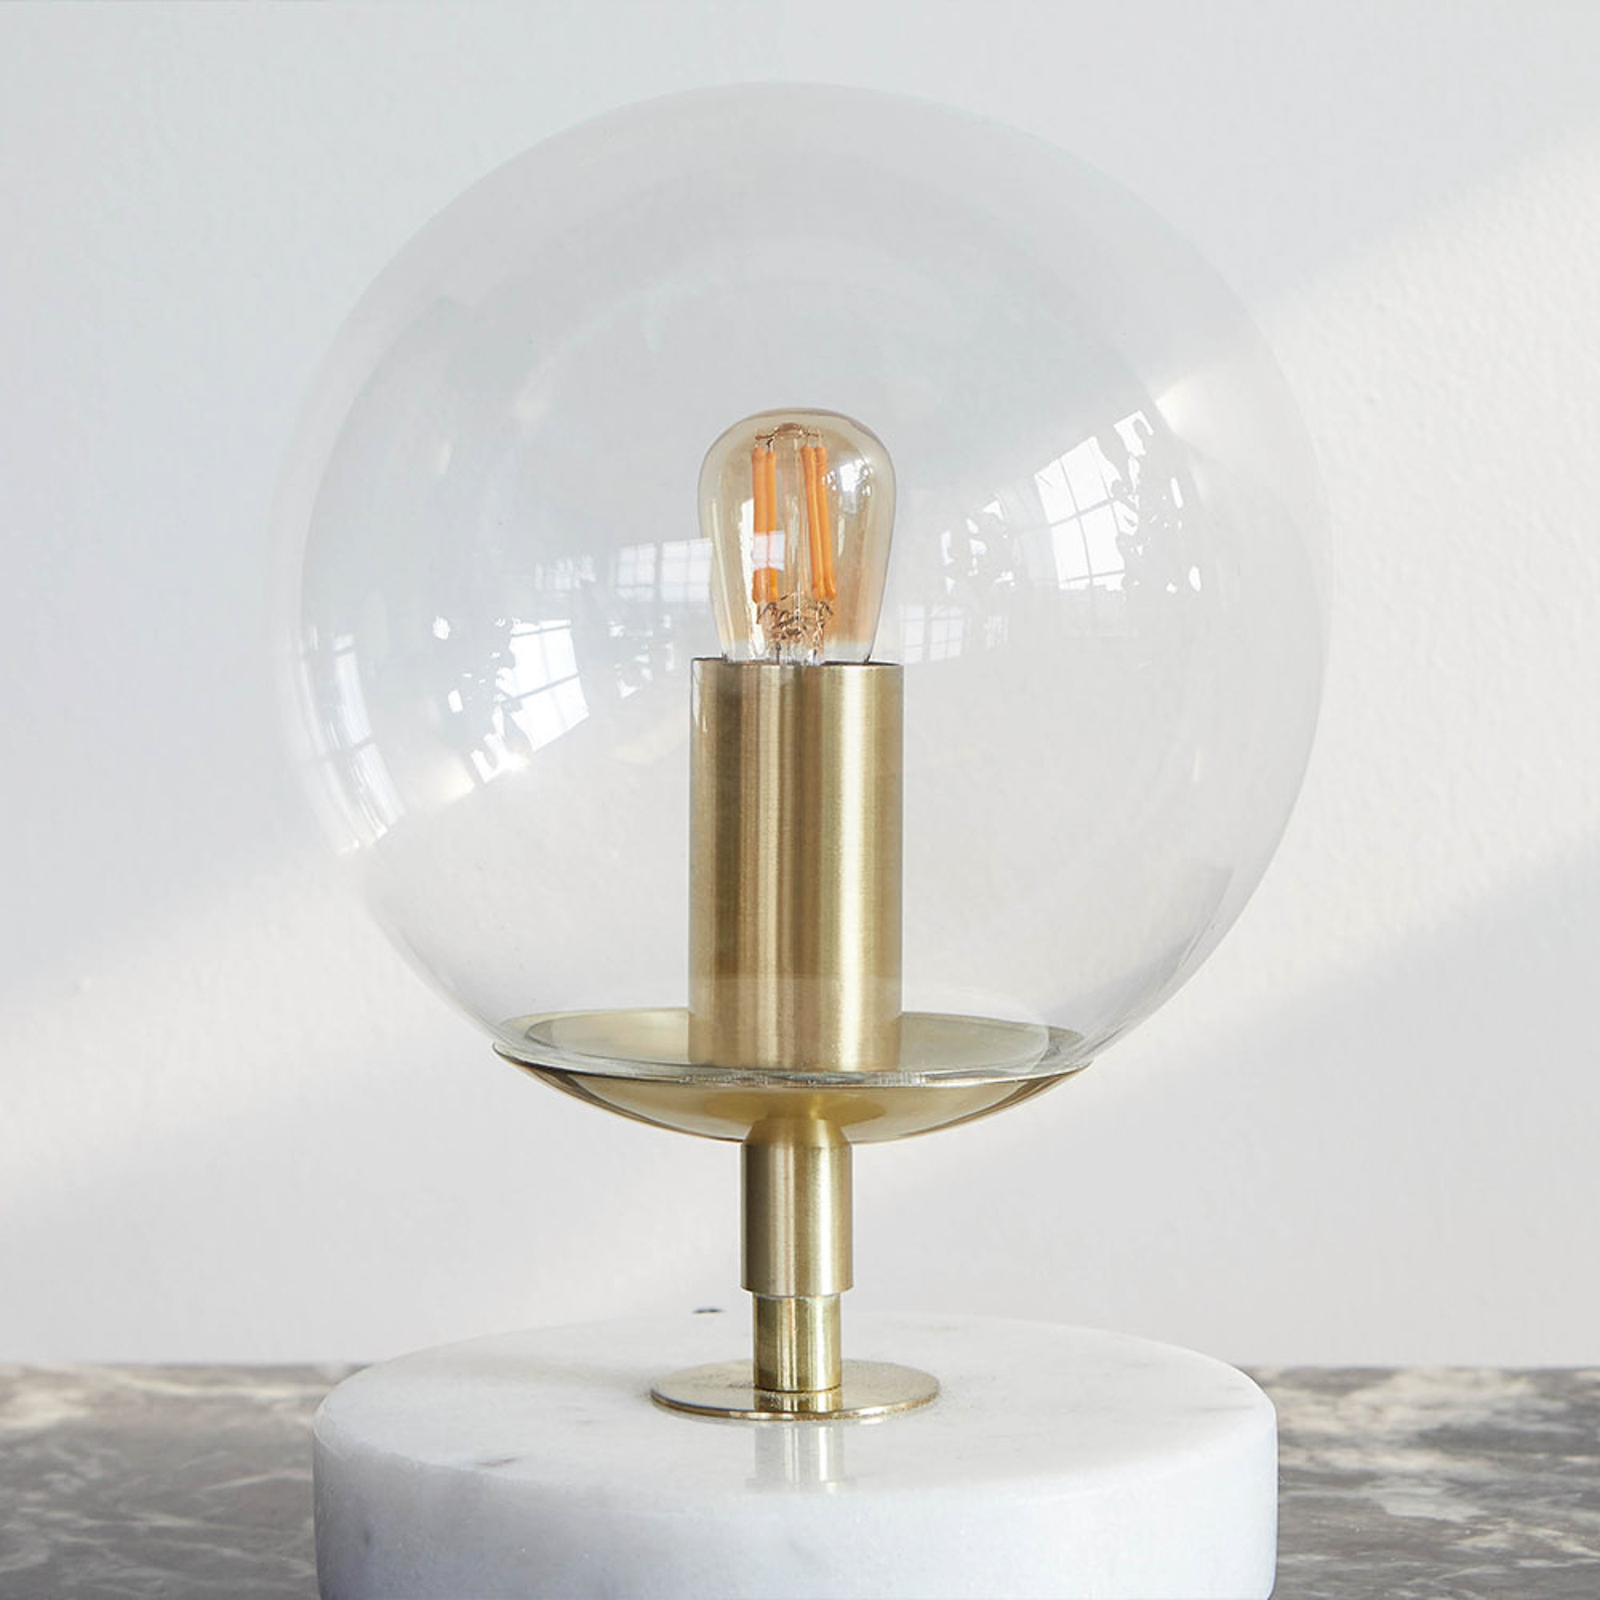 Tala LED bulb E14, 2W, tinted glass, 2,200 K, 120 lm